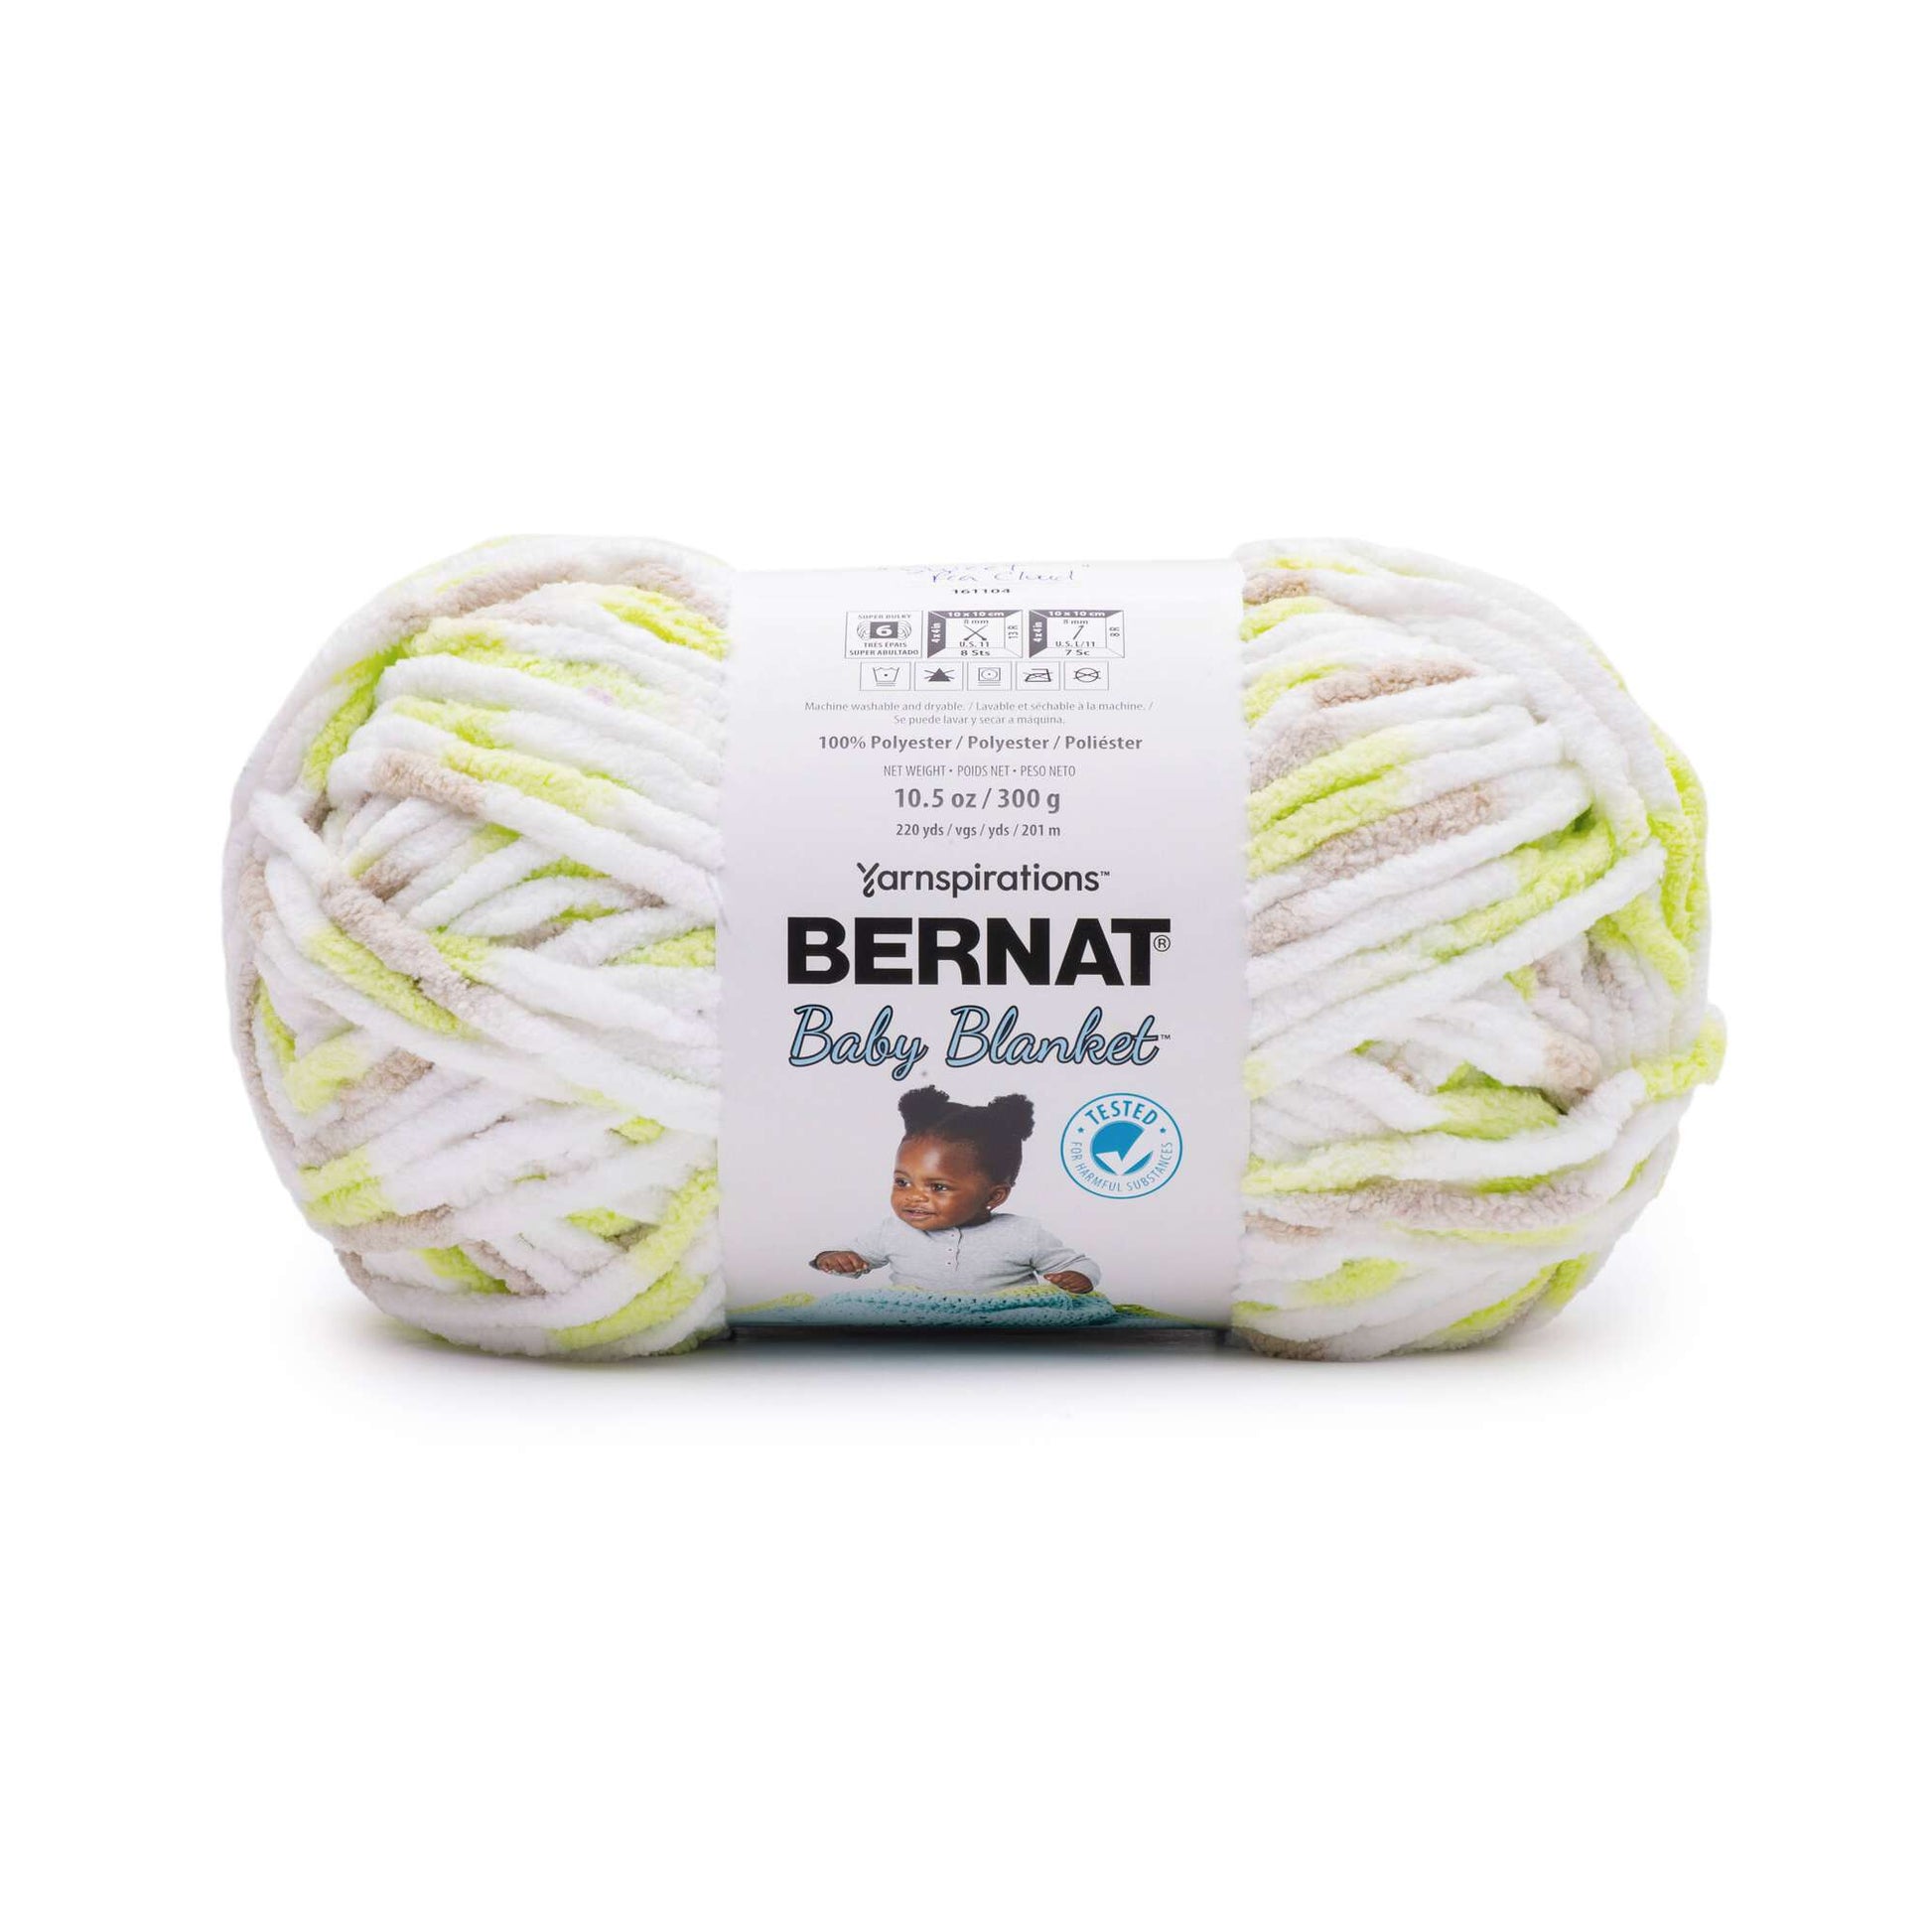 Bernat+Blanket+Yarn+10.5oz+Twilight+220yds+Polyester+Wt.+6+Super+Bulky+Blue  for sale online